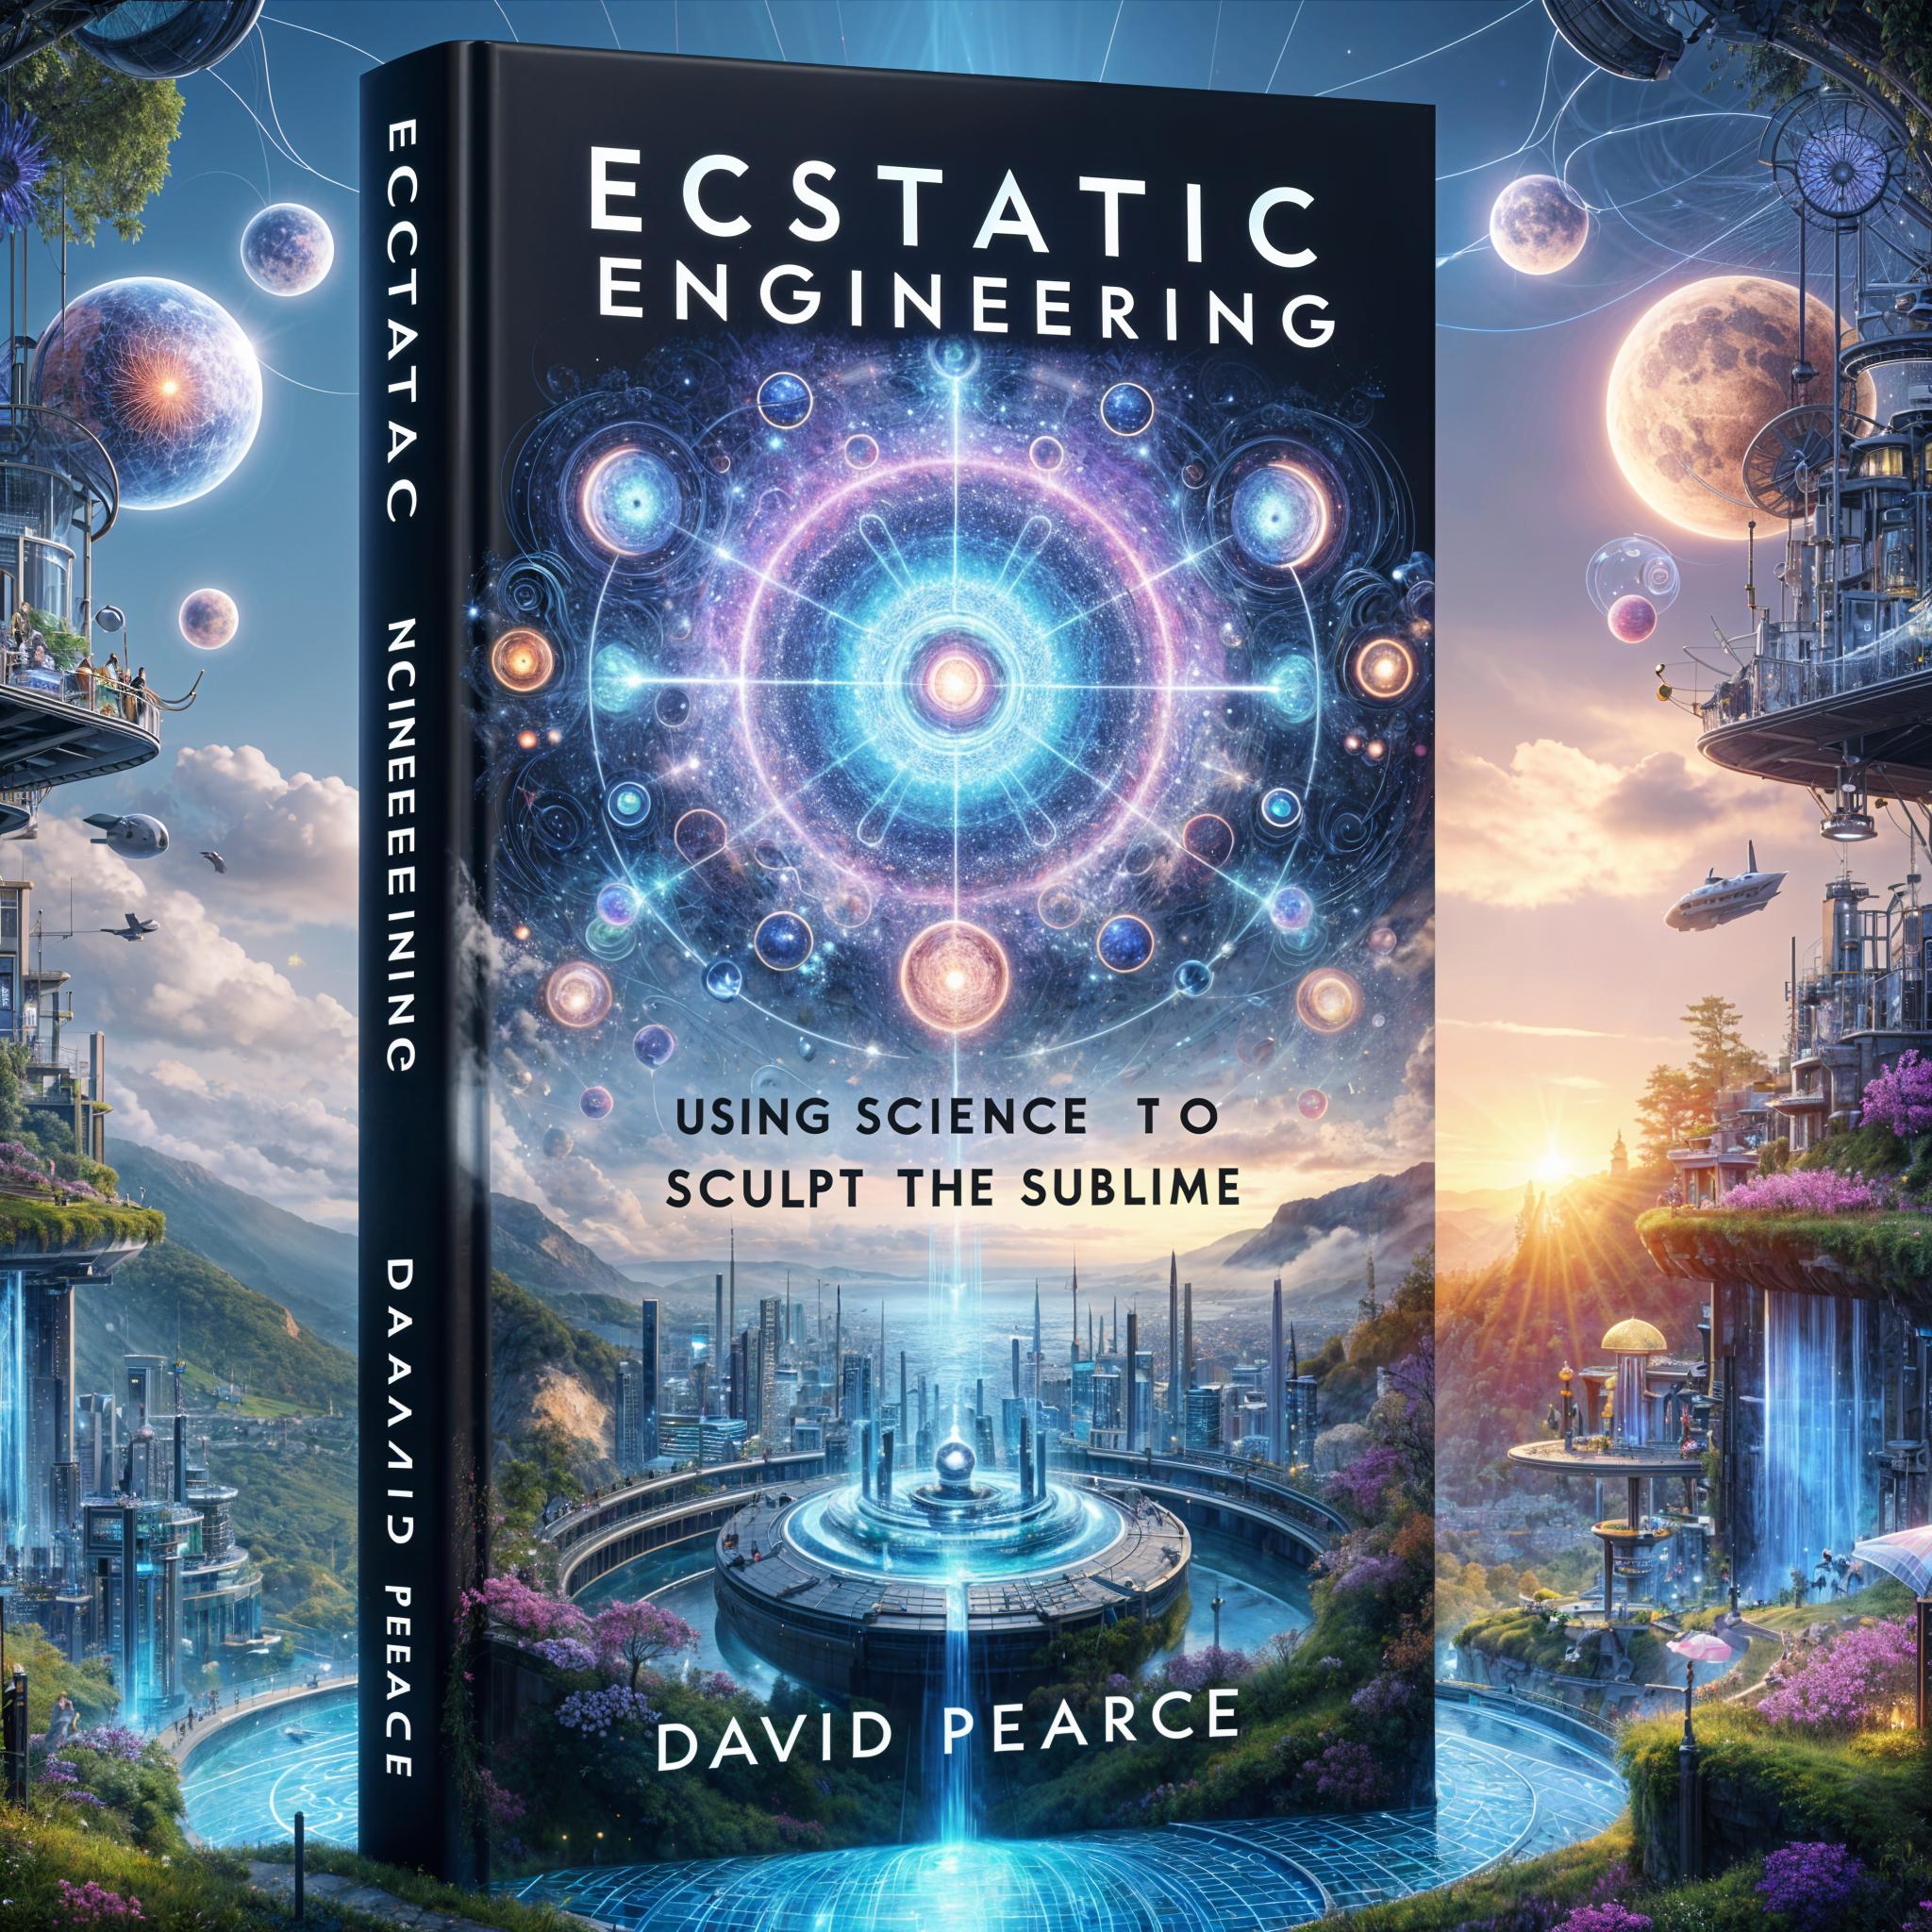 Ecstastic Engineering by David Pearce